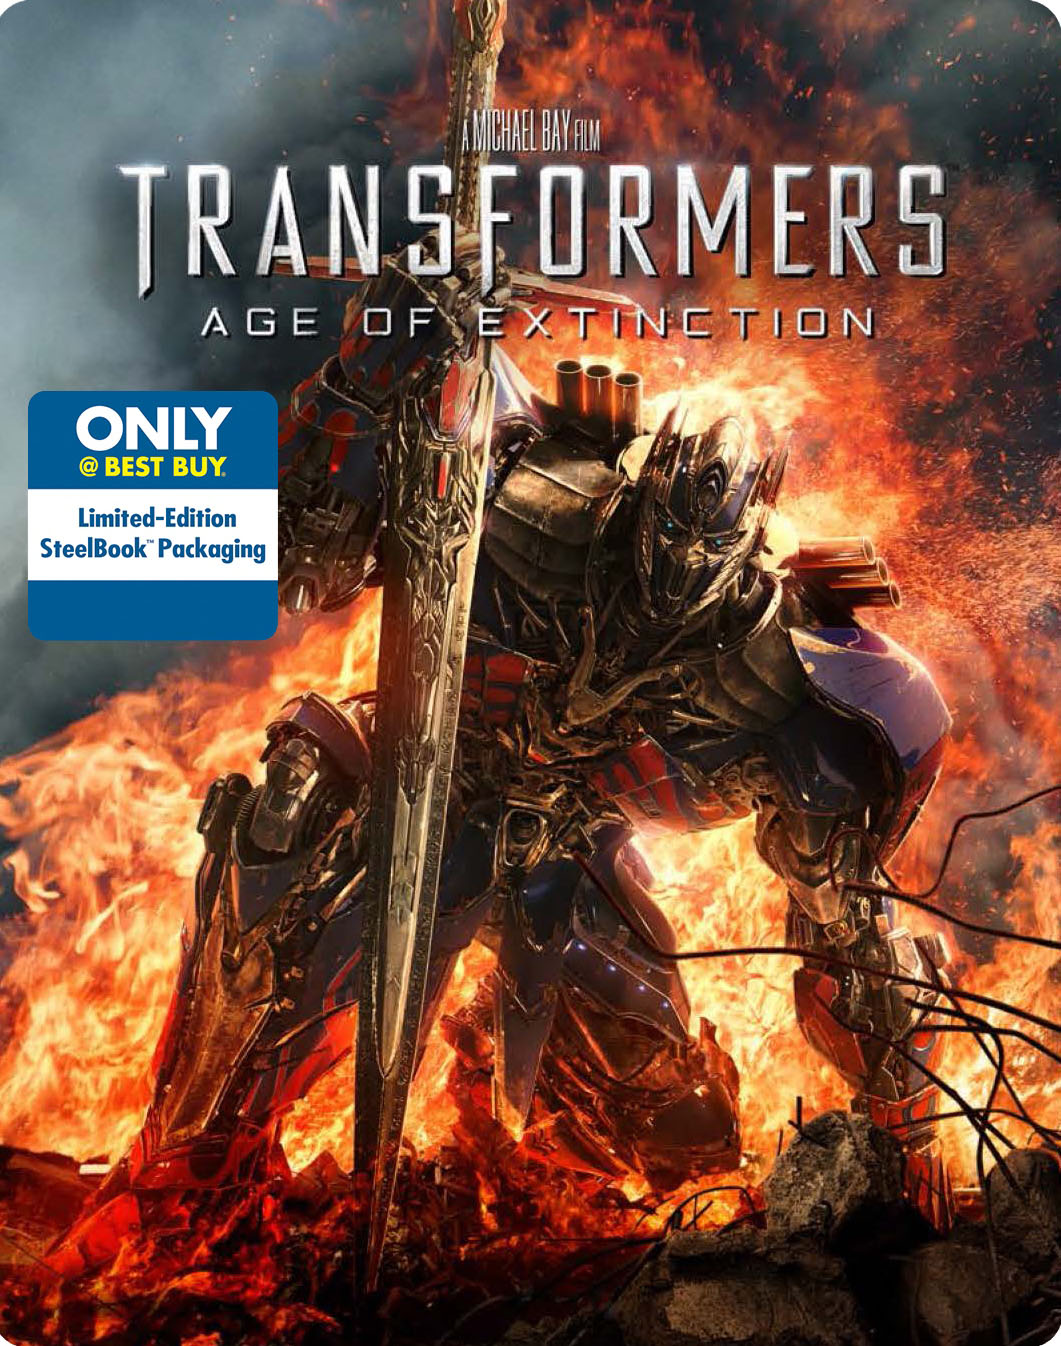 transformers 4 dvd release date